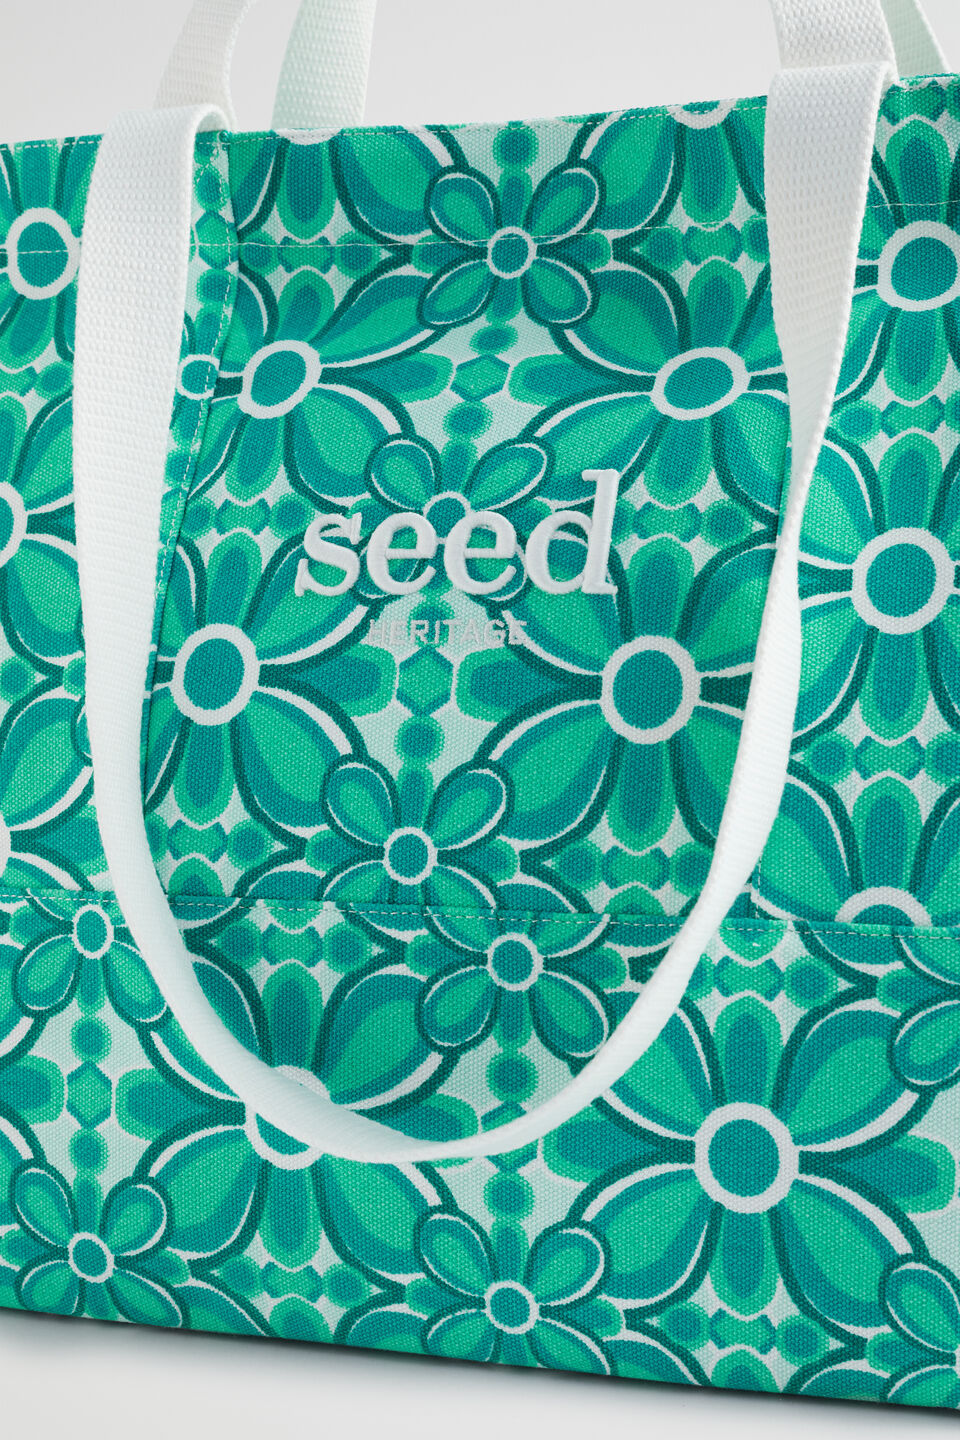 Seed Overnight Bag  Jade Green Retro